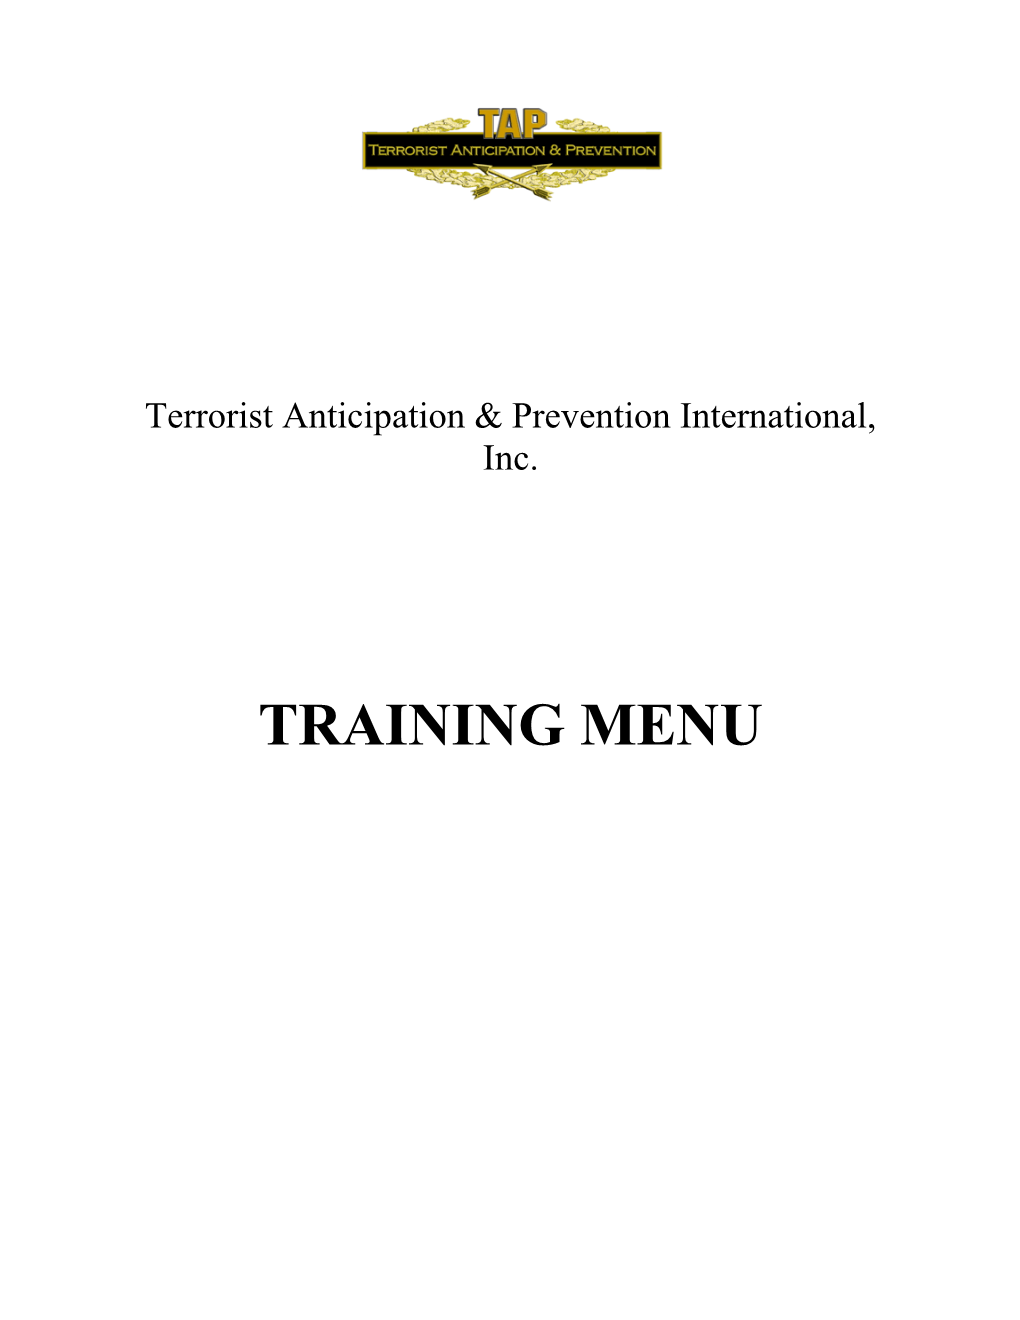 Terrorist Anticipation & Prevention International, Inc